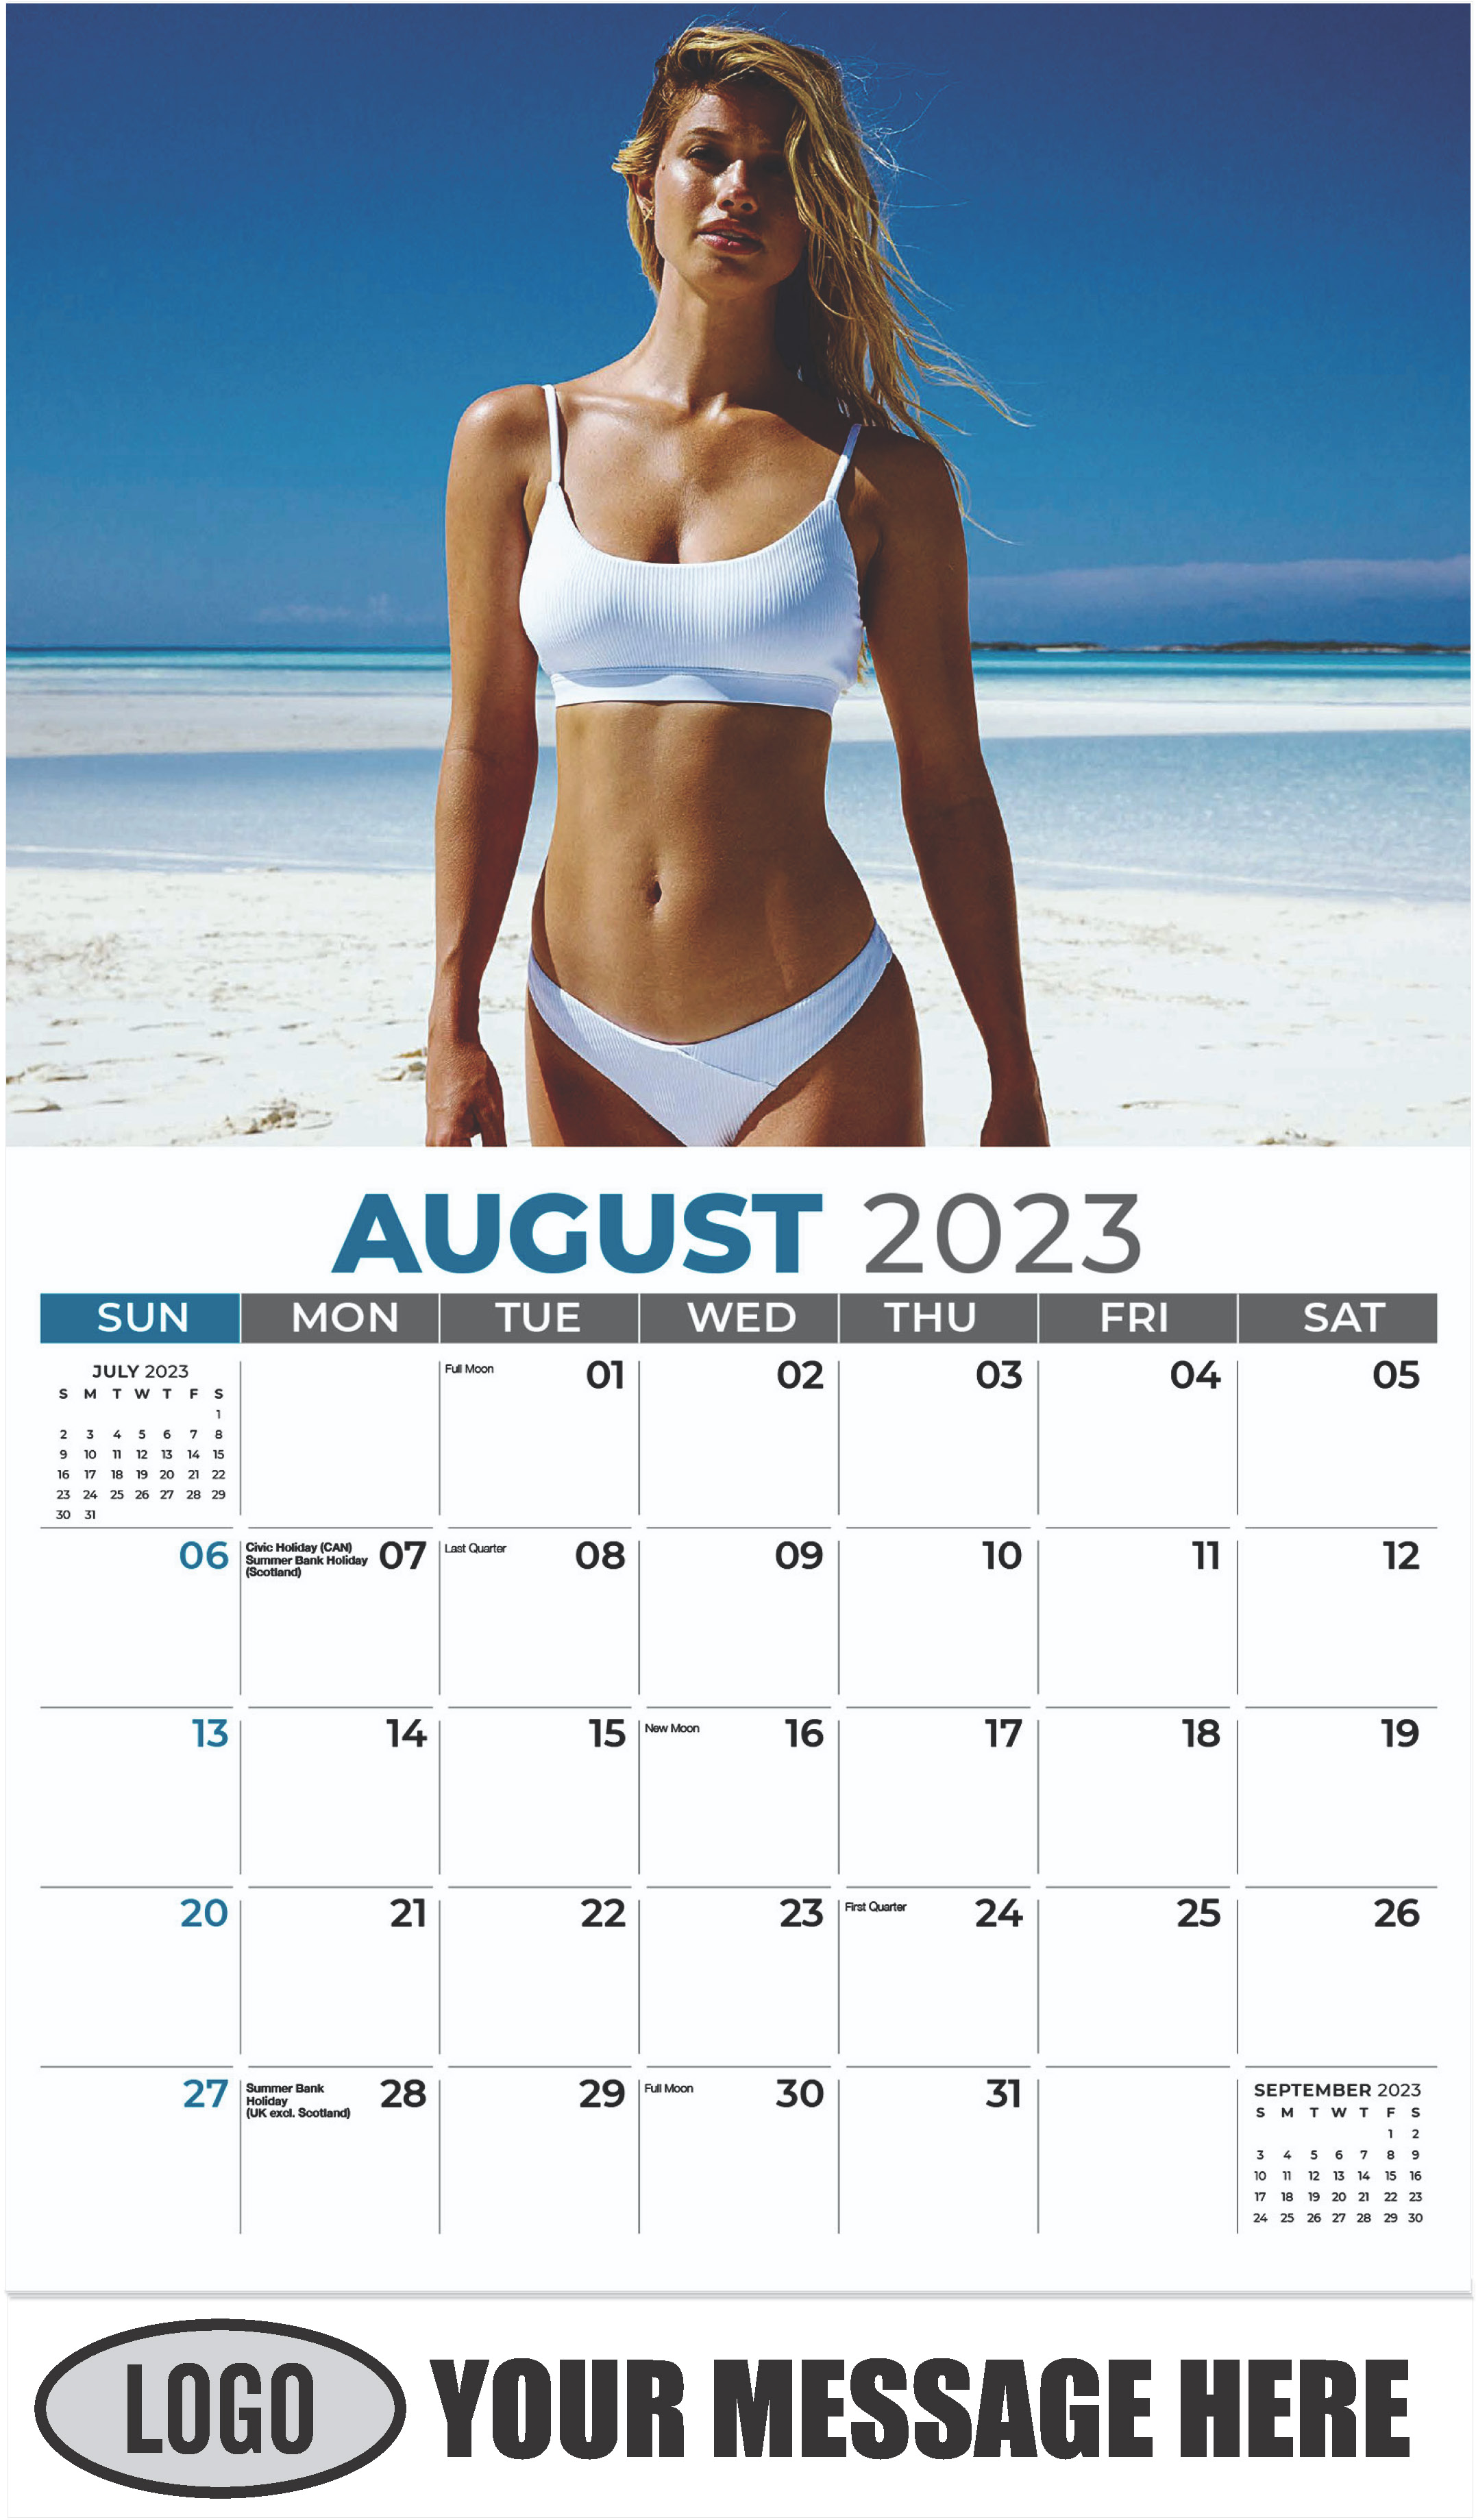 Bikini Models Calendar - August - Swimsuits 2023 Promotional Calendar